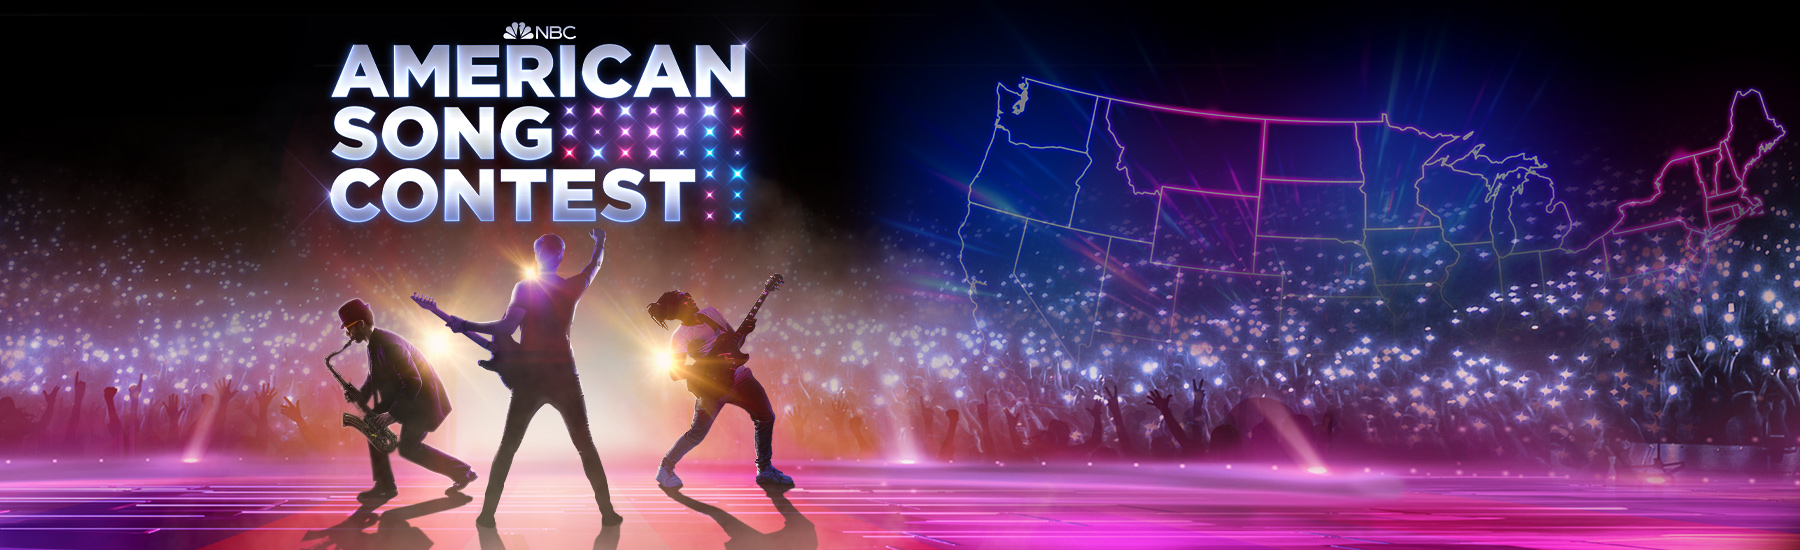 Eurovision made in USA: Η AleXa από την Οκλαχόμα νίκησε στο πρώτο American Song Contest